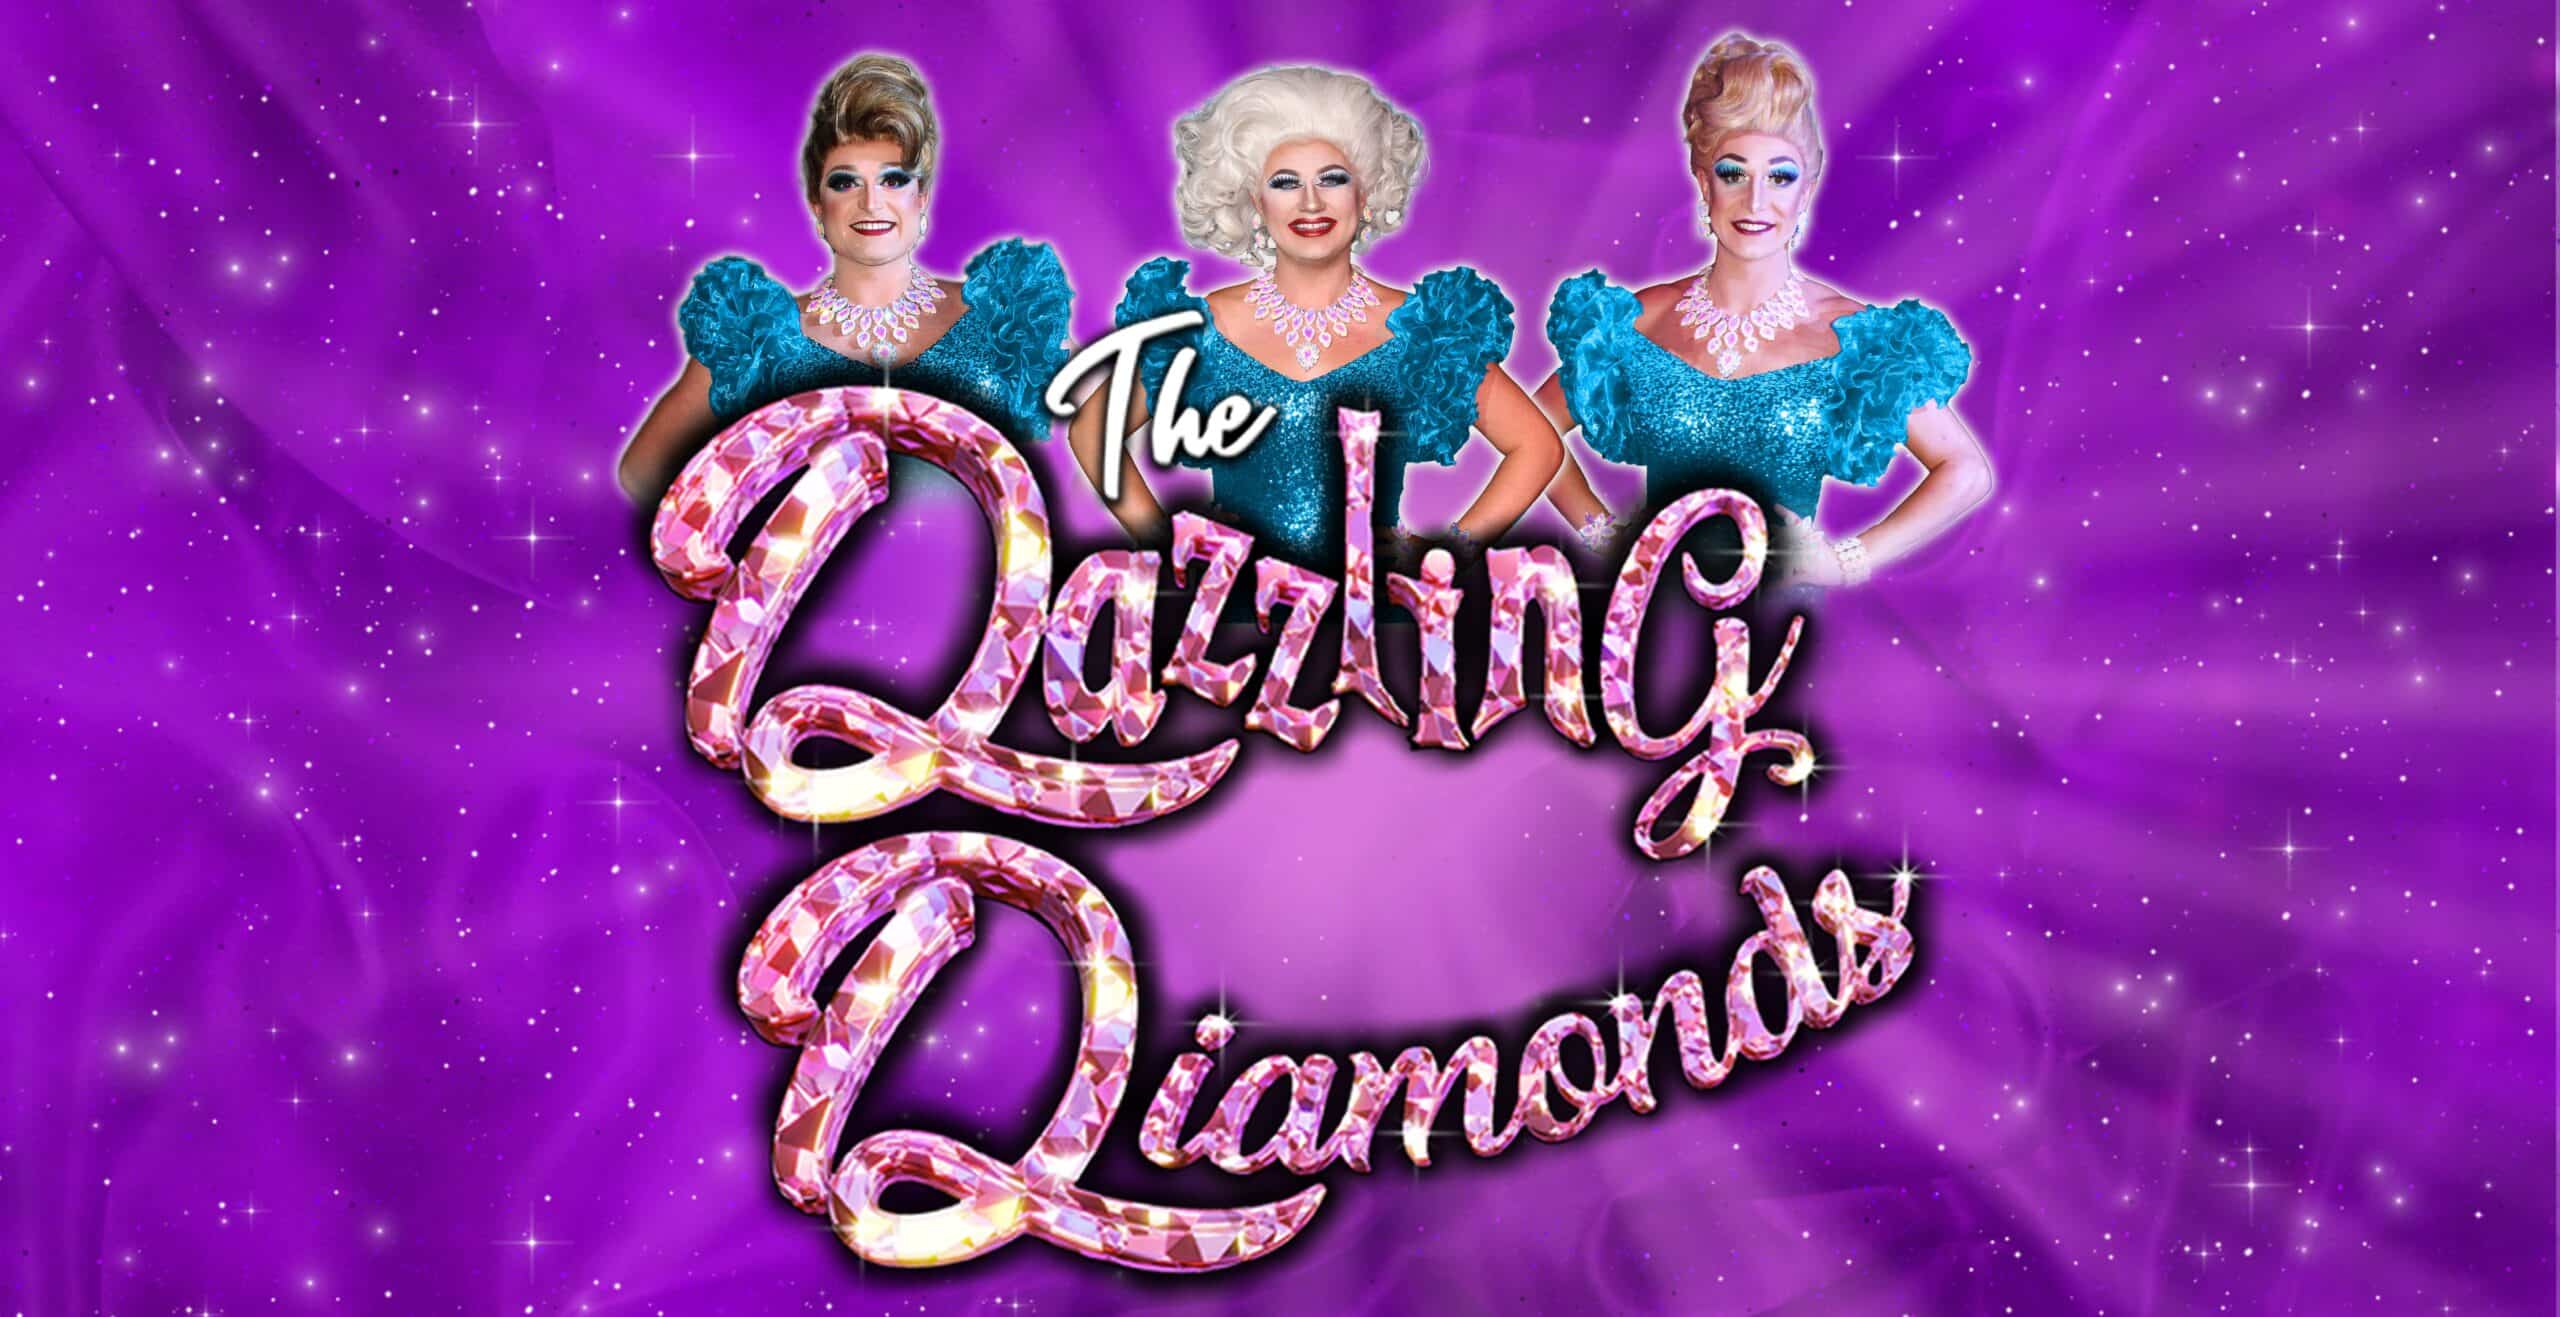 The Dazzling Diamonds